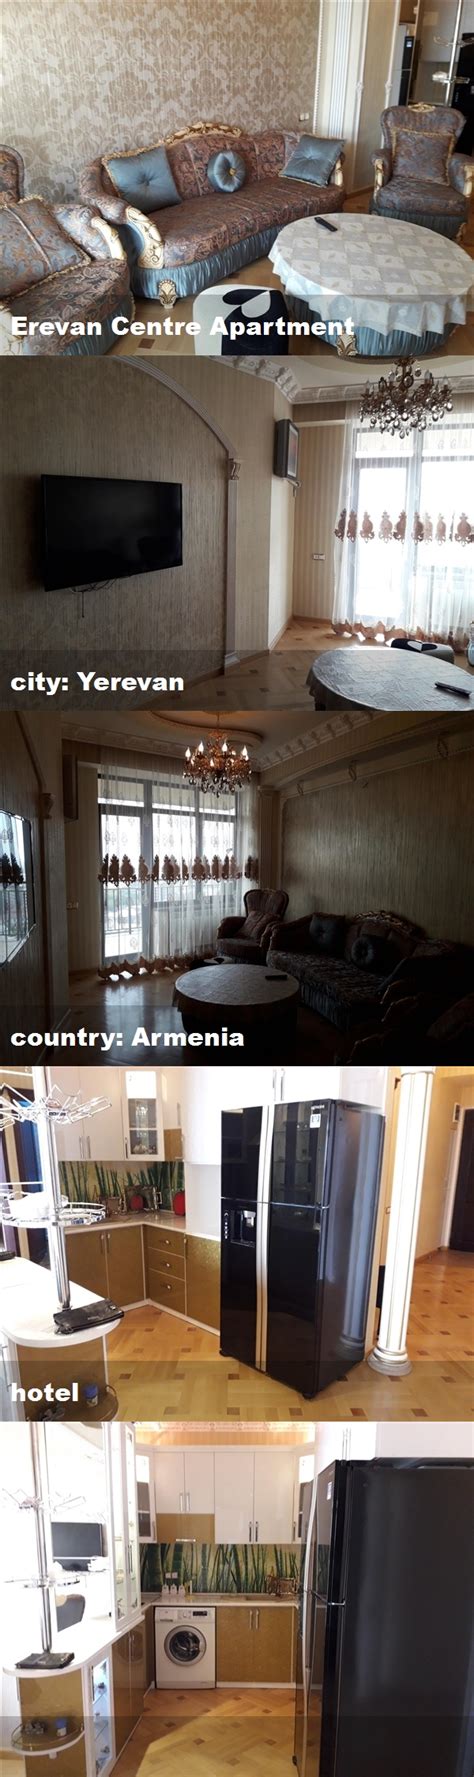 erevan centre apartment city yerevan country armenia hotel hotel apartment armenia